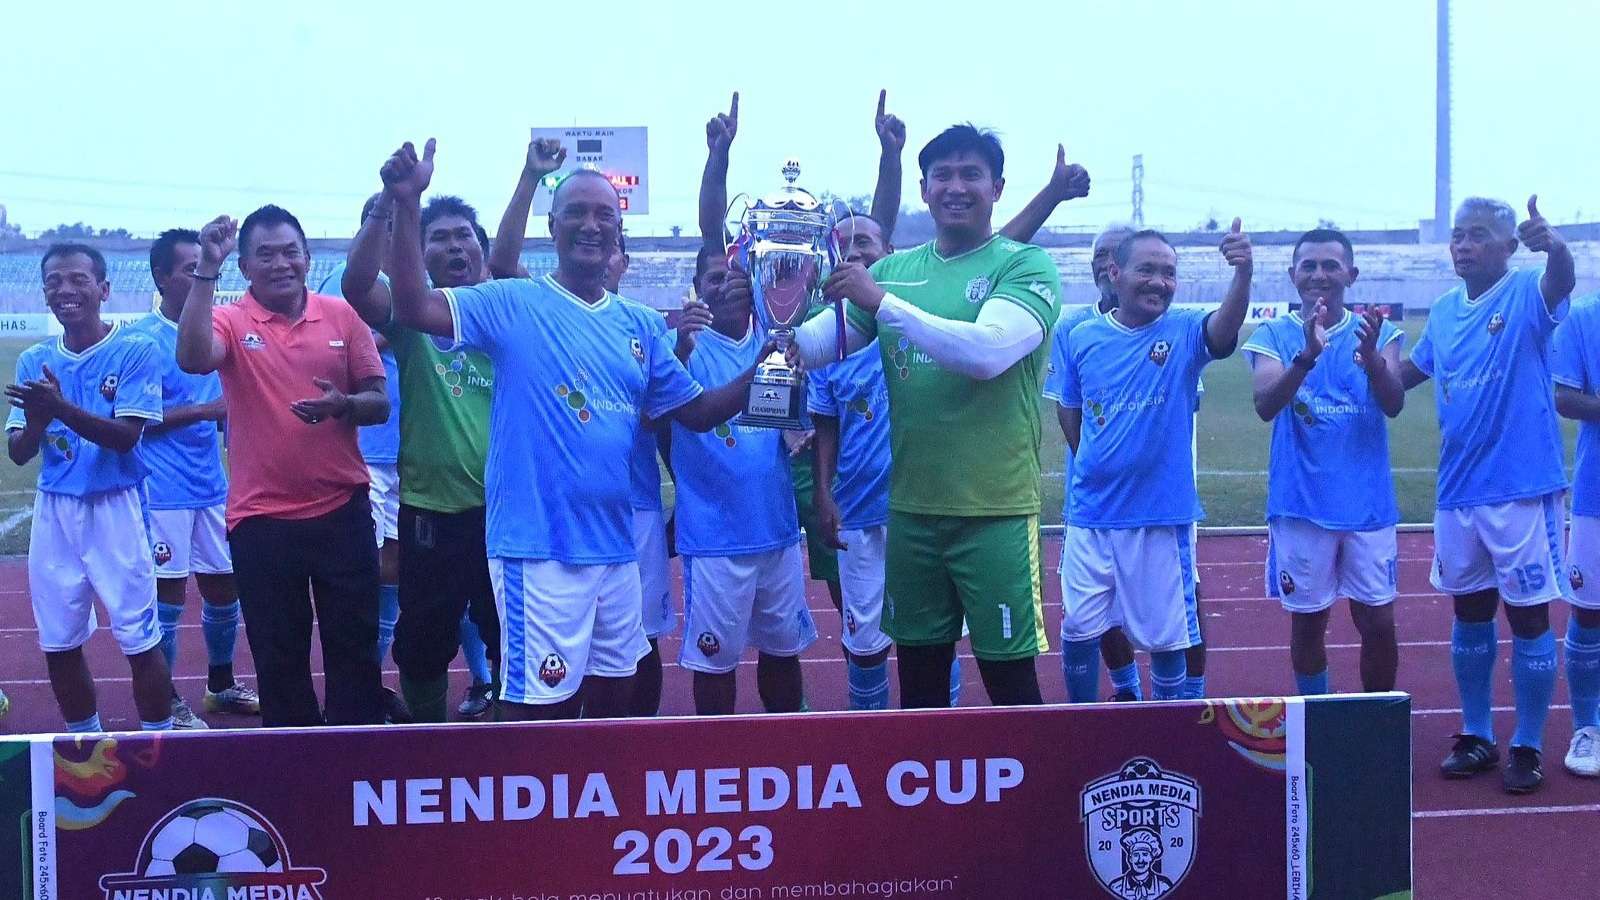 Nendia Cup 2023